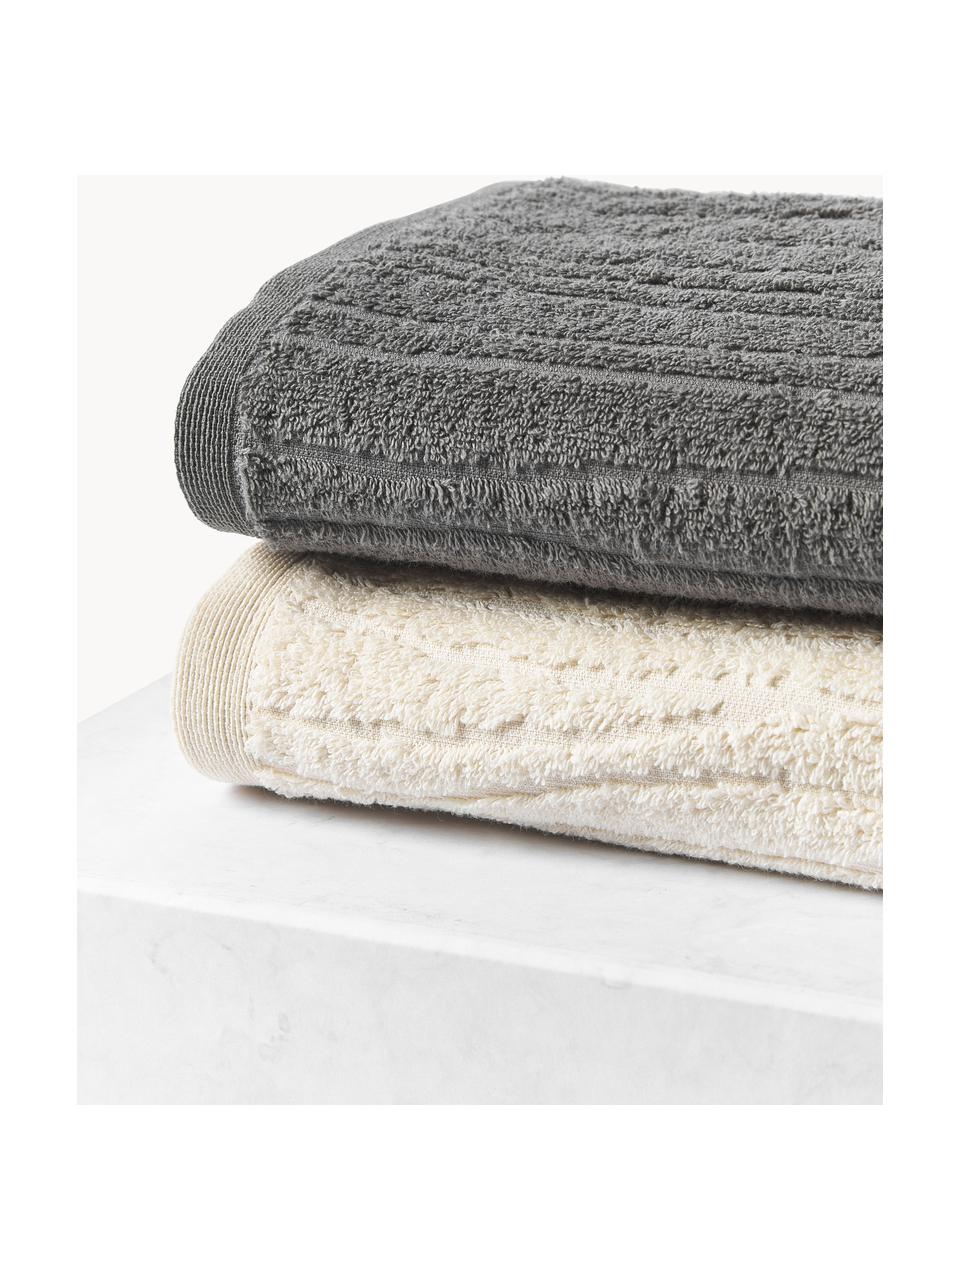 Set di asciugamani in cotone Audrina, in varie misure, Beige chiaro, Set in varie misure